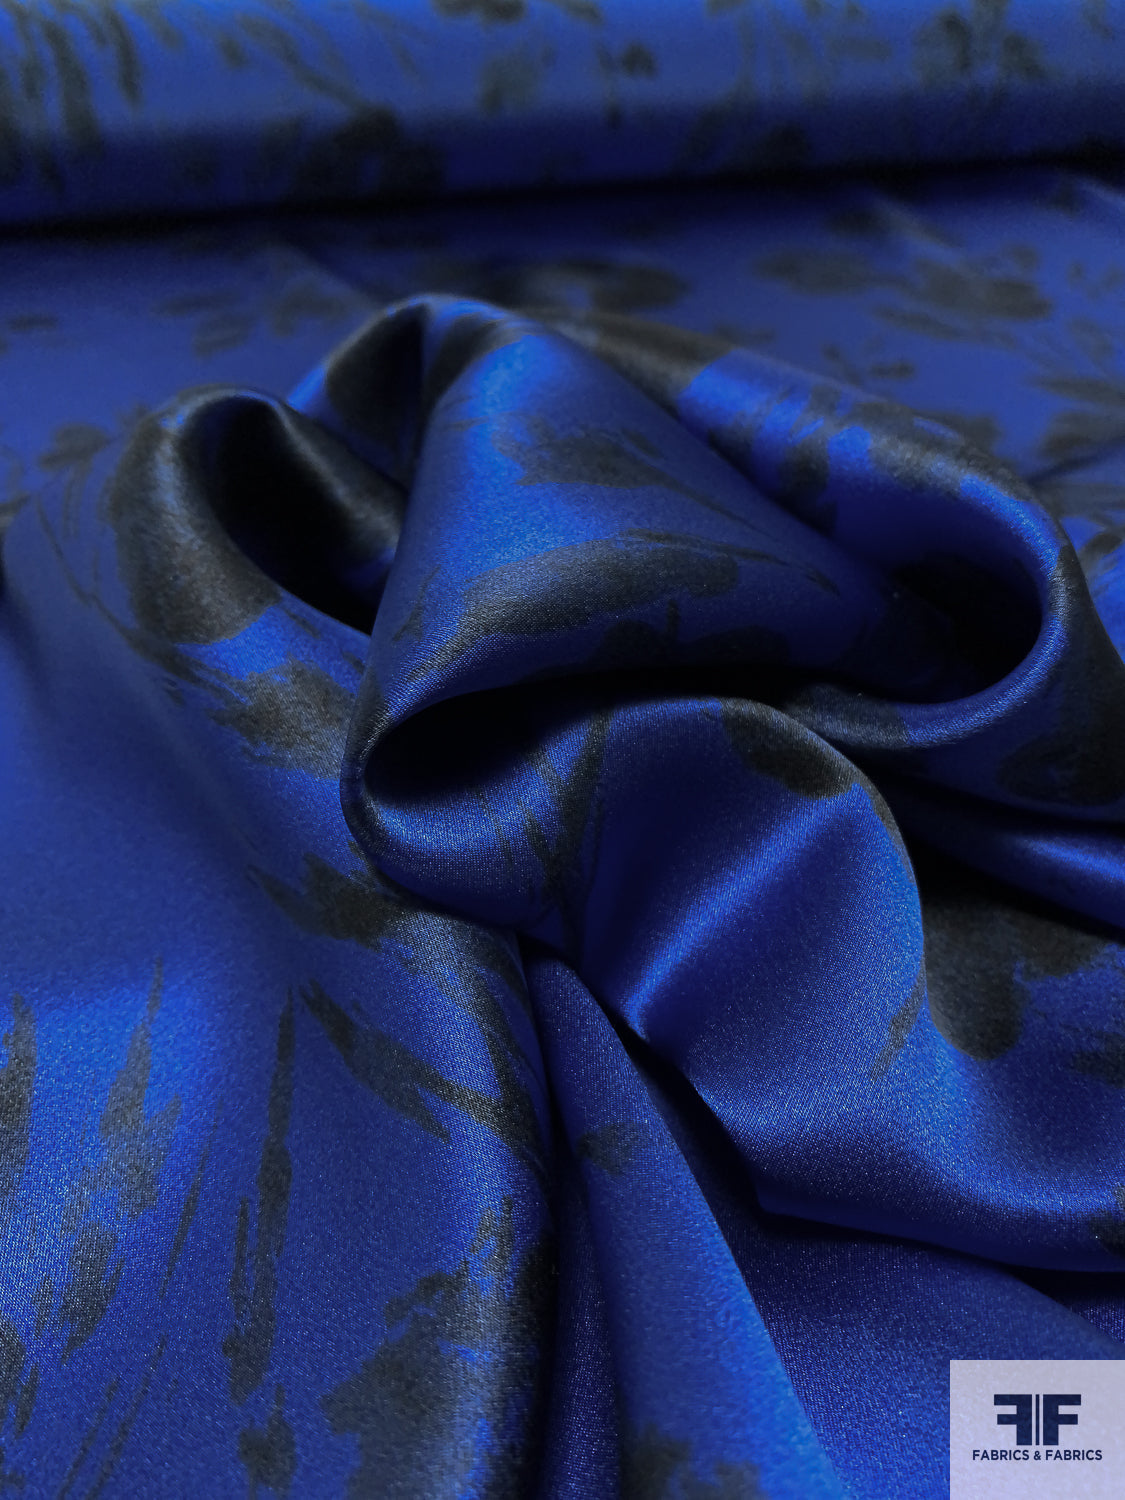 Romantic Floral Printed Silk Charmeuse - Royal Blue / Black